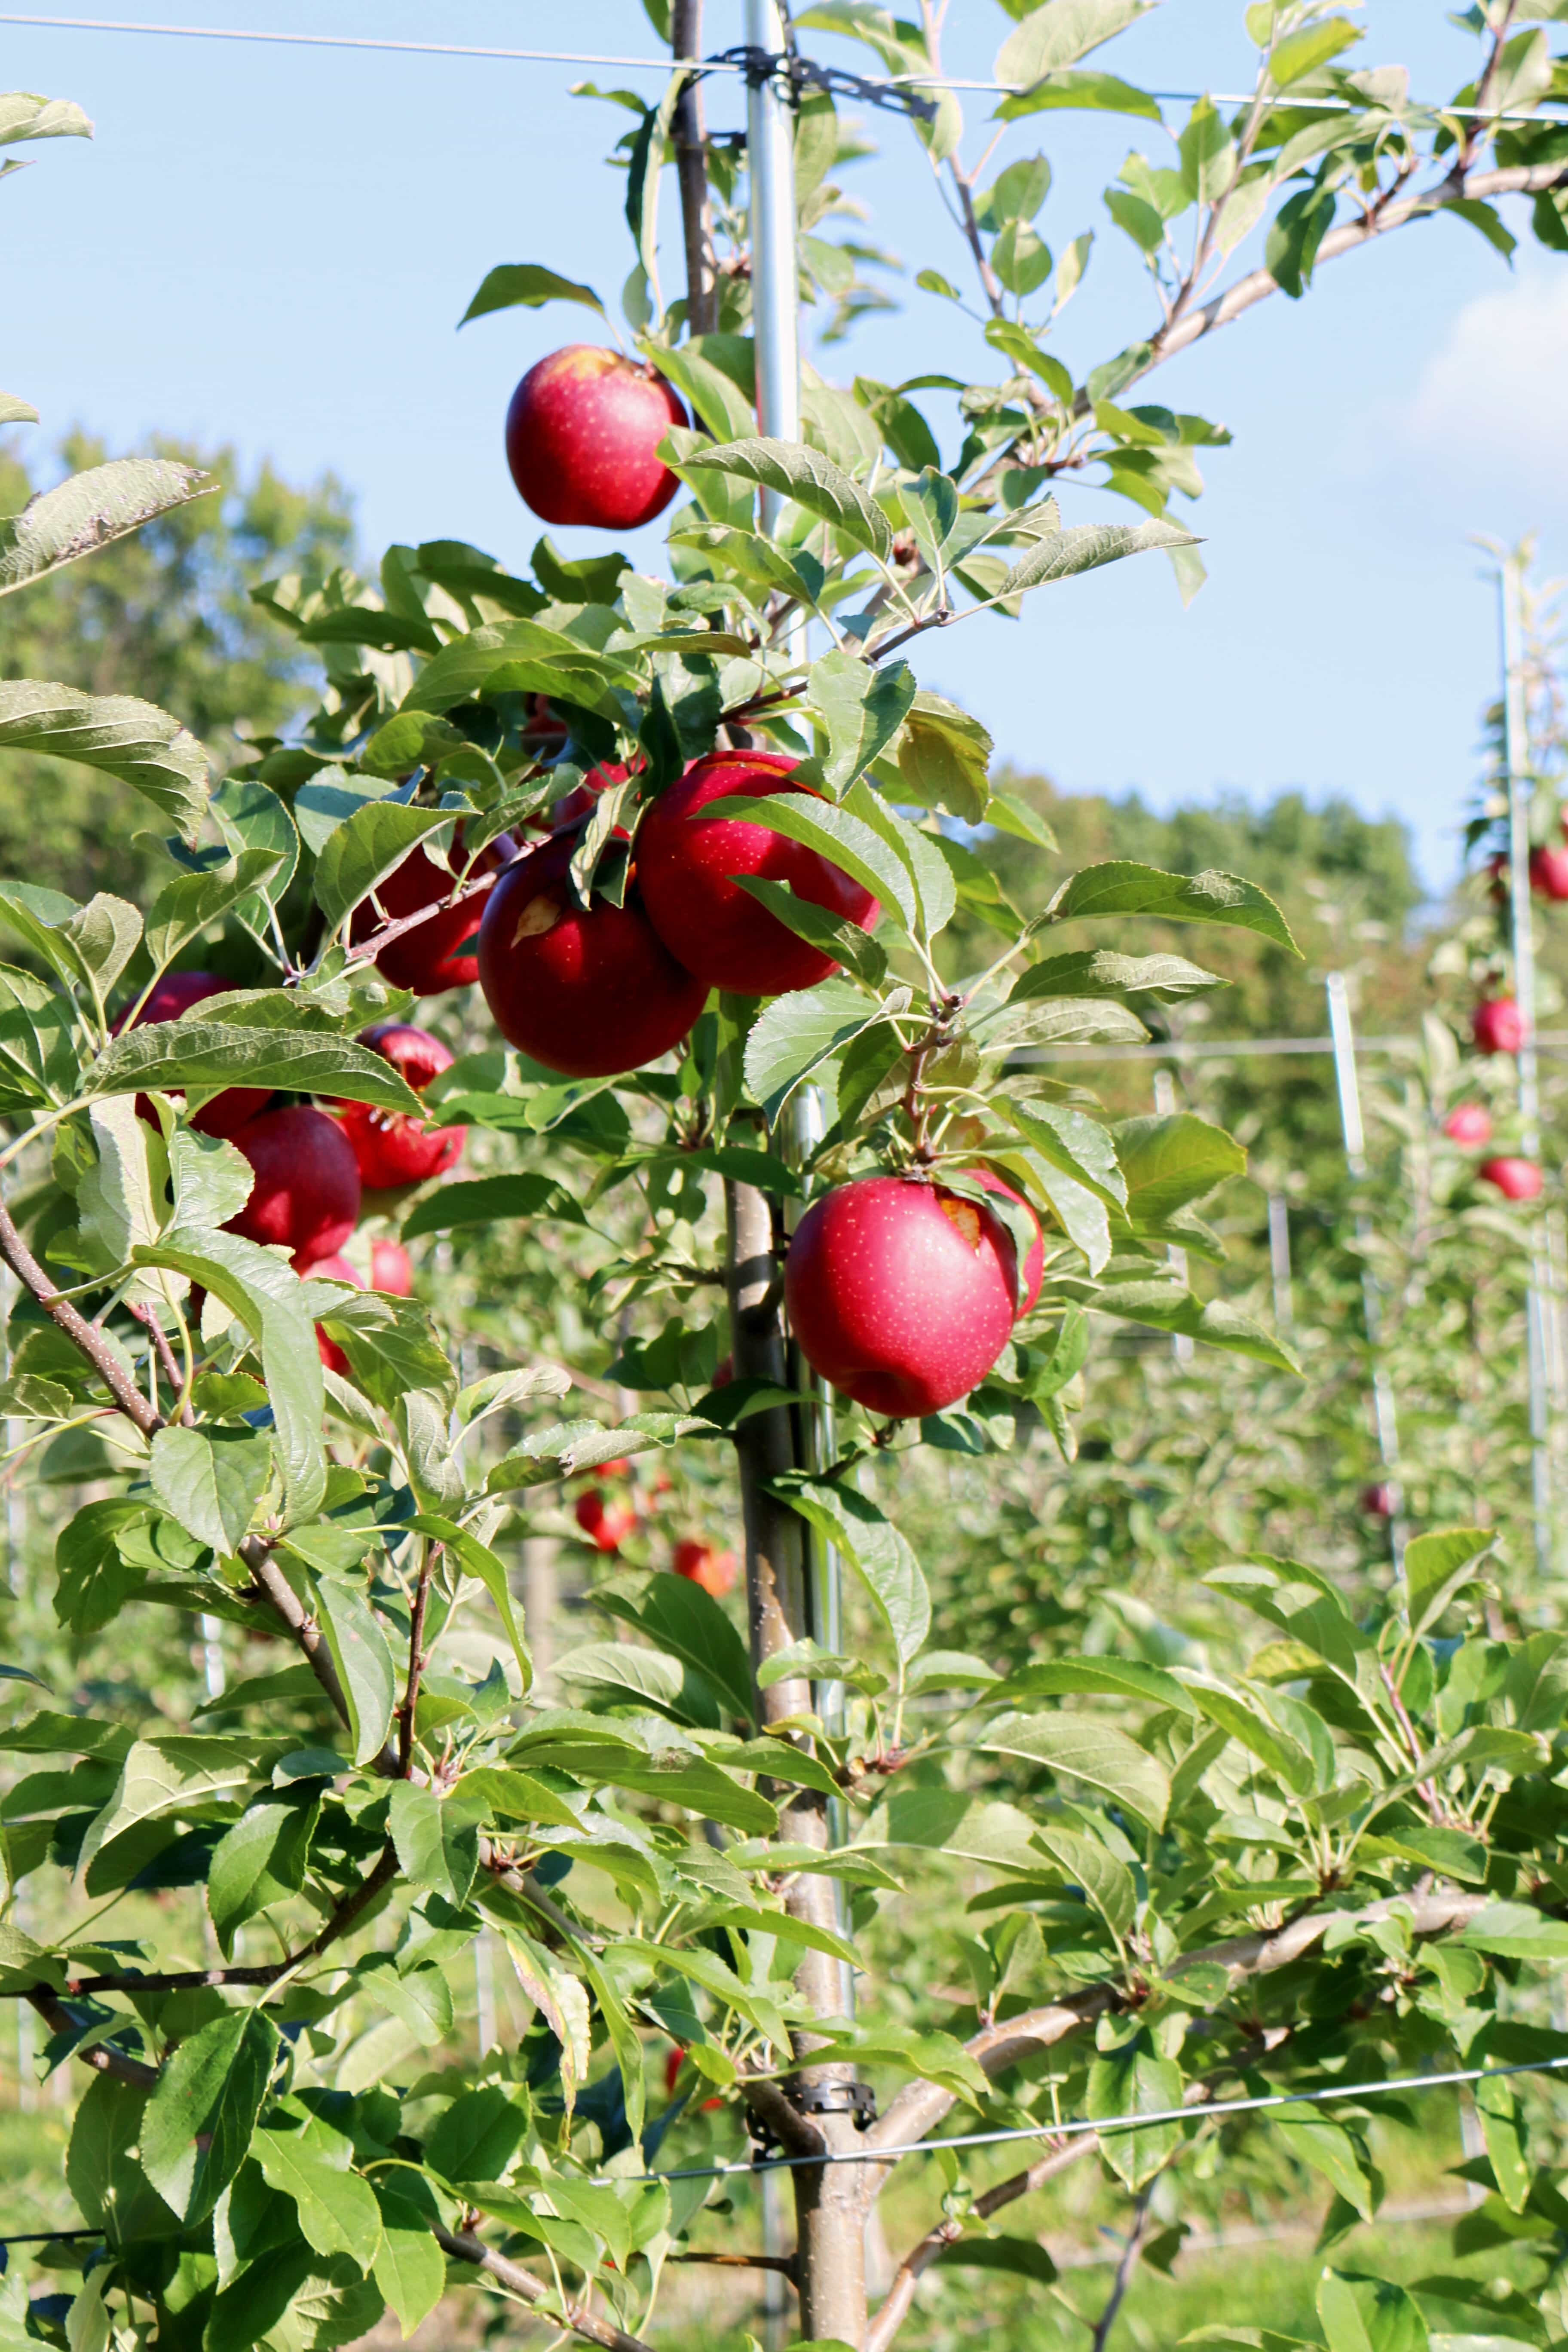 Gaver-Farm-Apple=Harvest-Fall-Festivals-Recogiendo-Manzanas